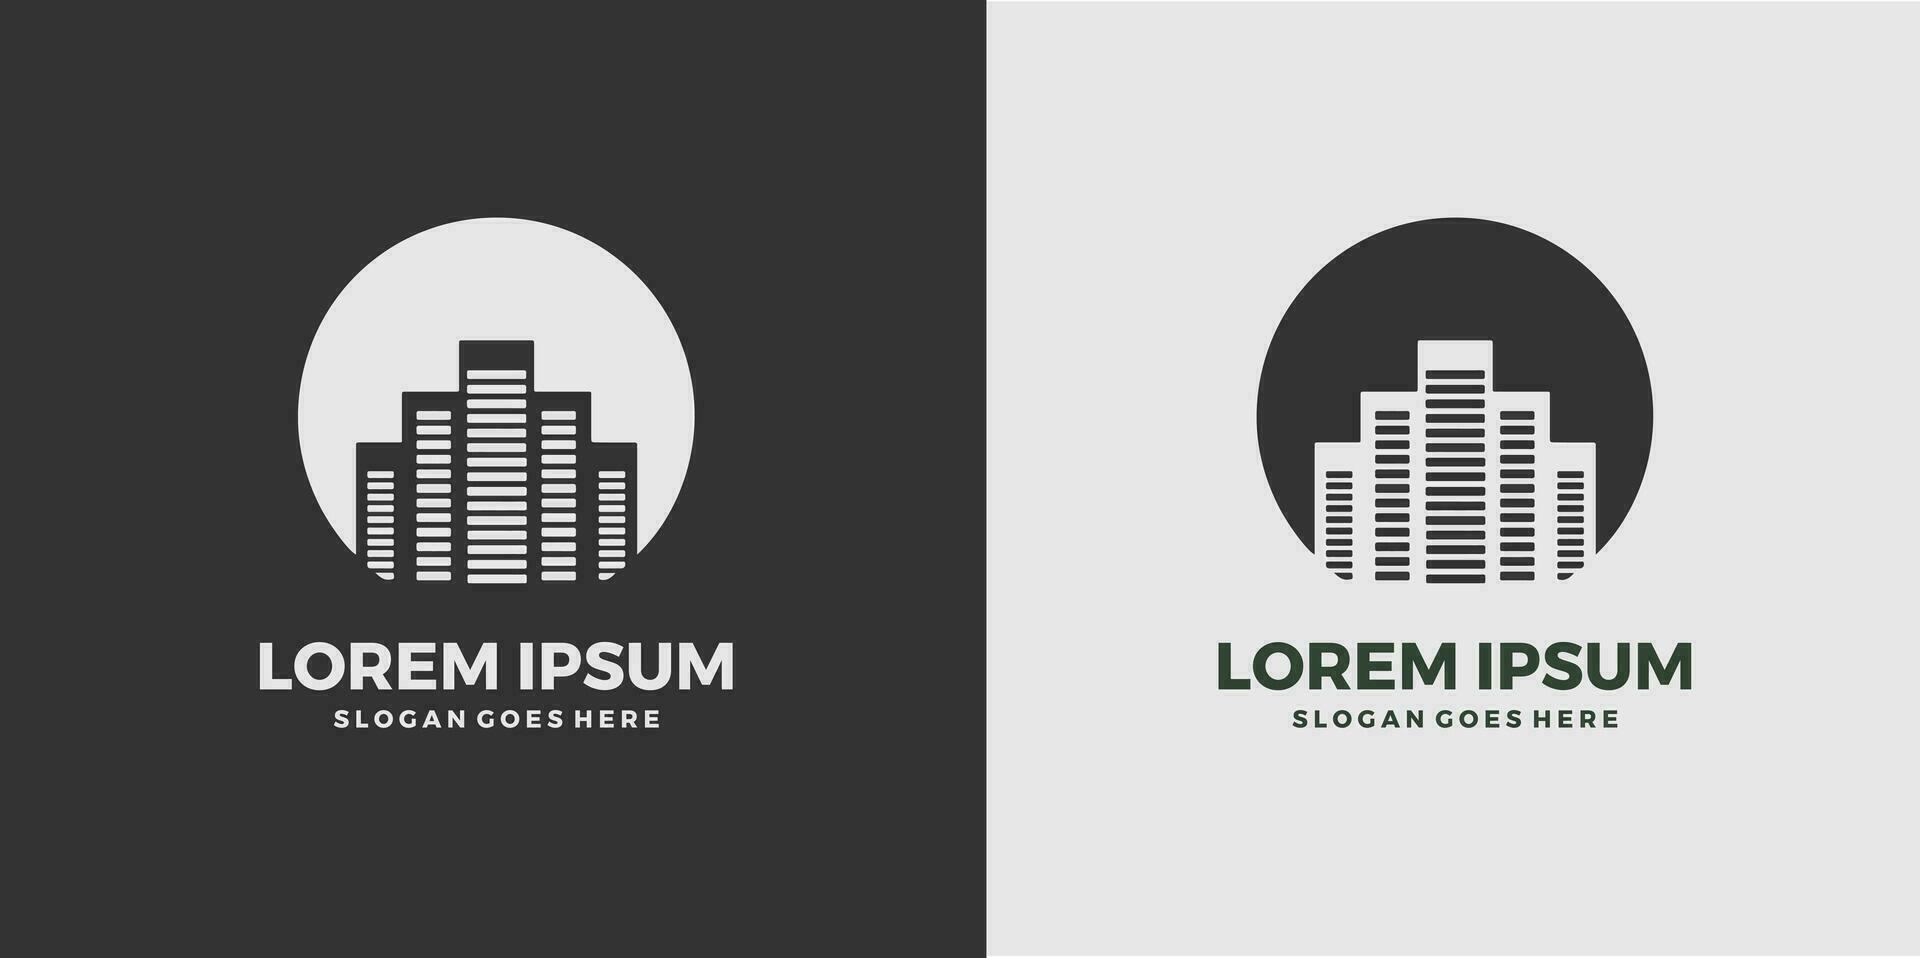 byggnad stad verklig egendom logotyp element, fast egendom fast egendom investering logotyp design fri vektor